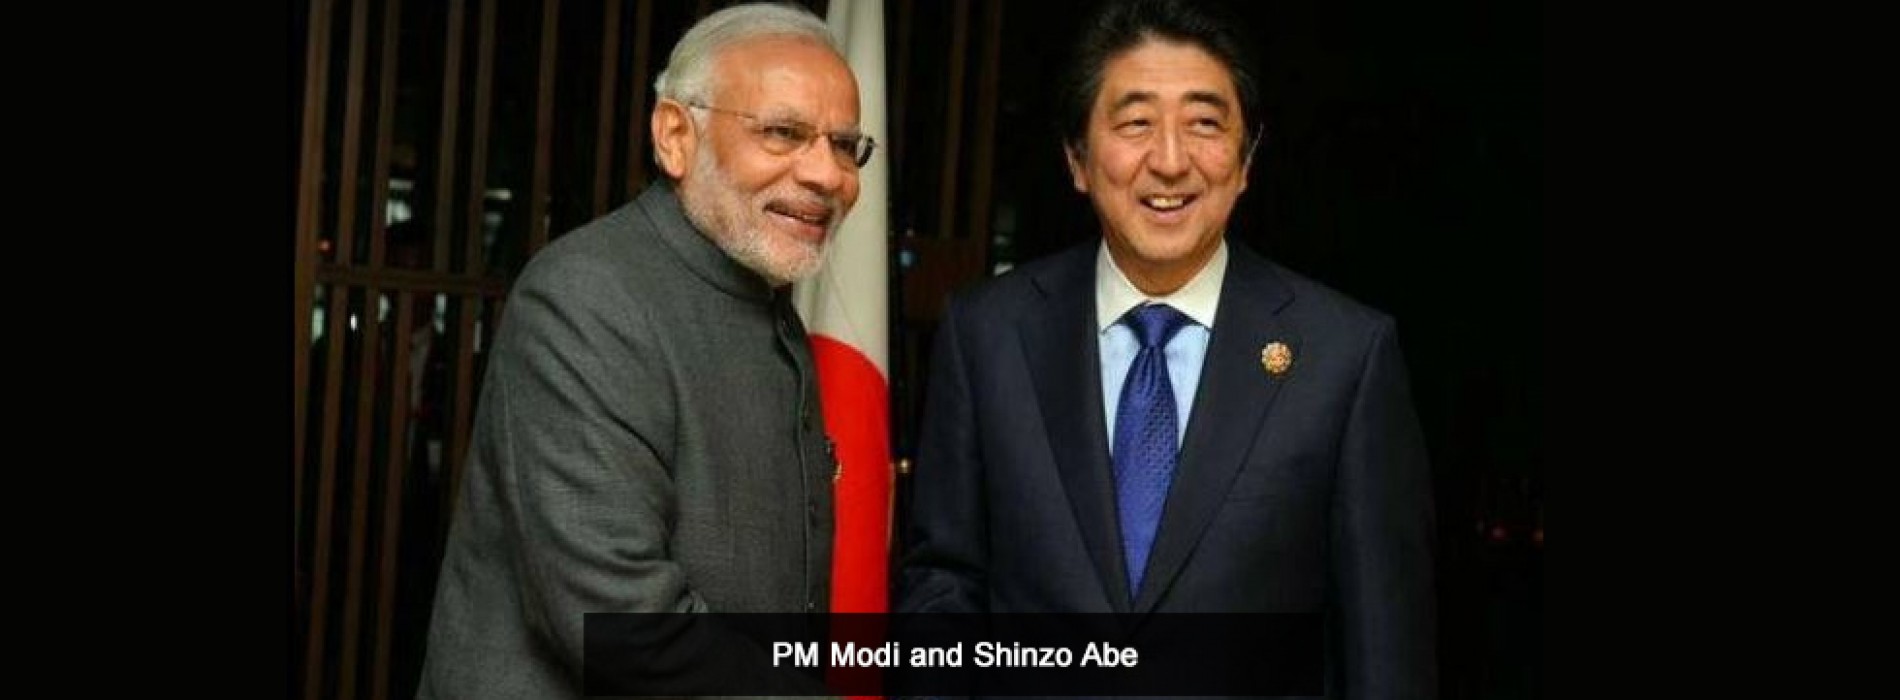 PM Modi and Shinzo Abe to lay foundation stone of bullet train on Thursday